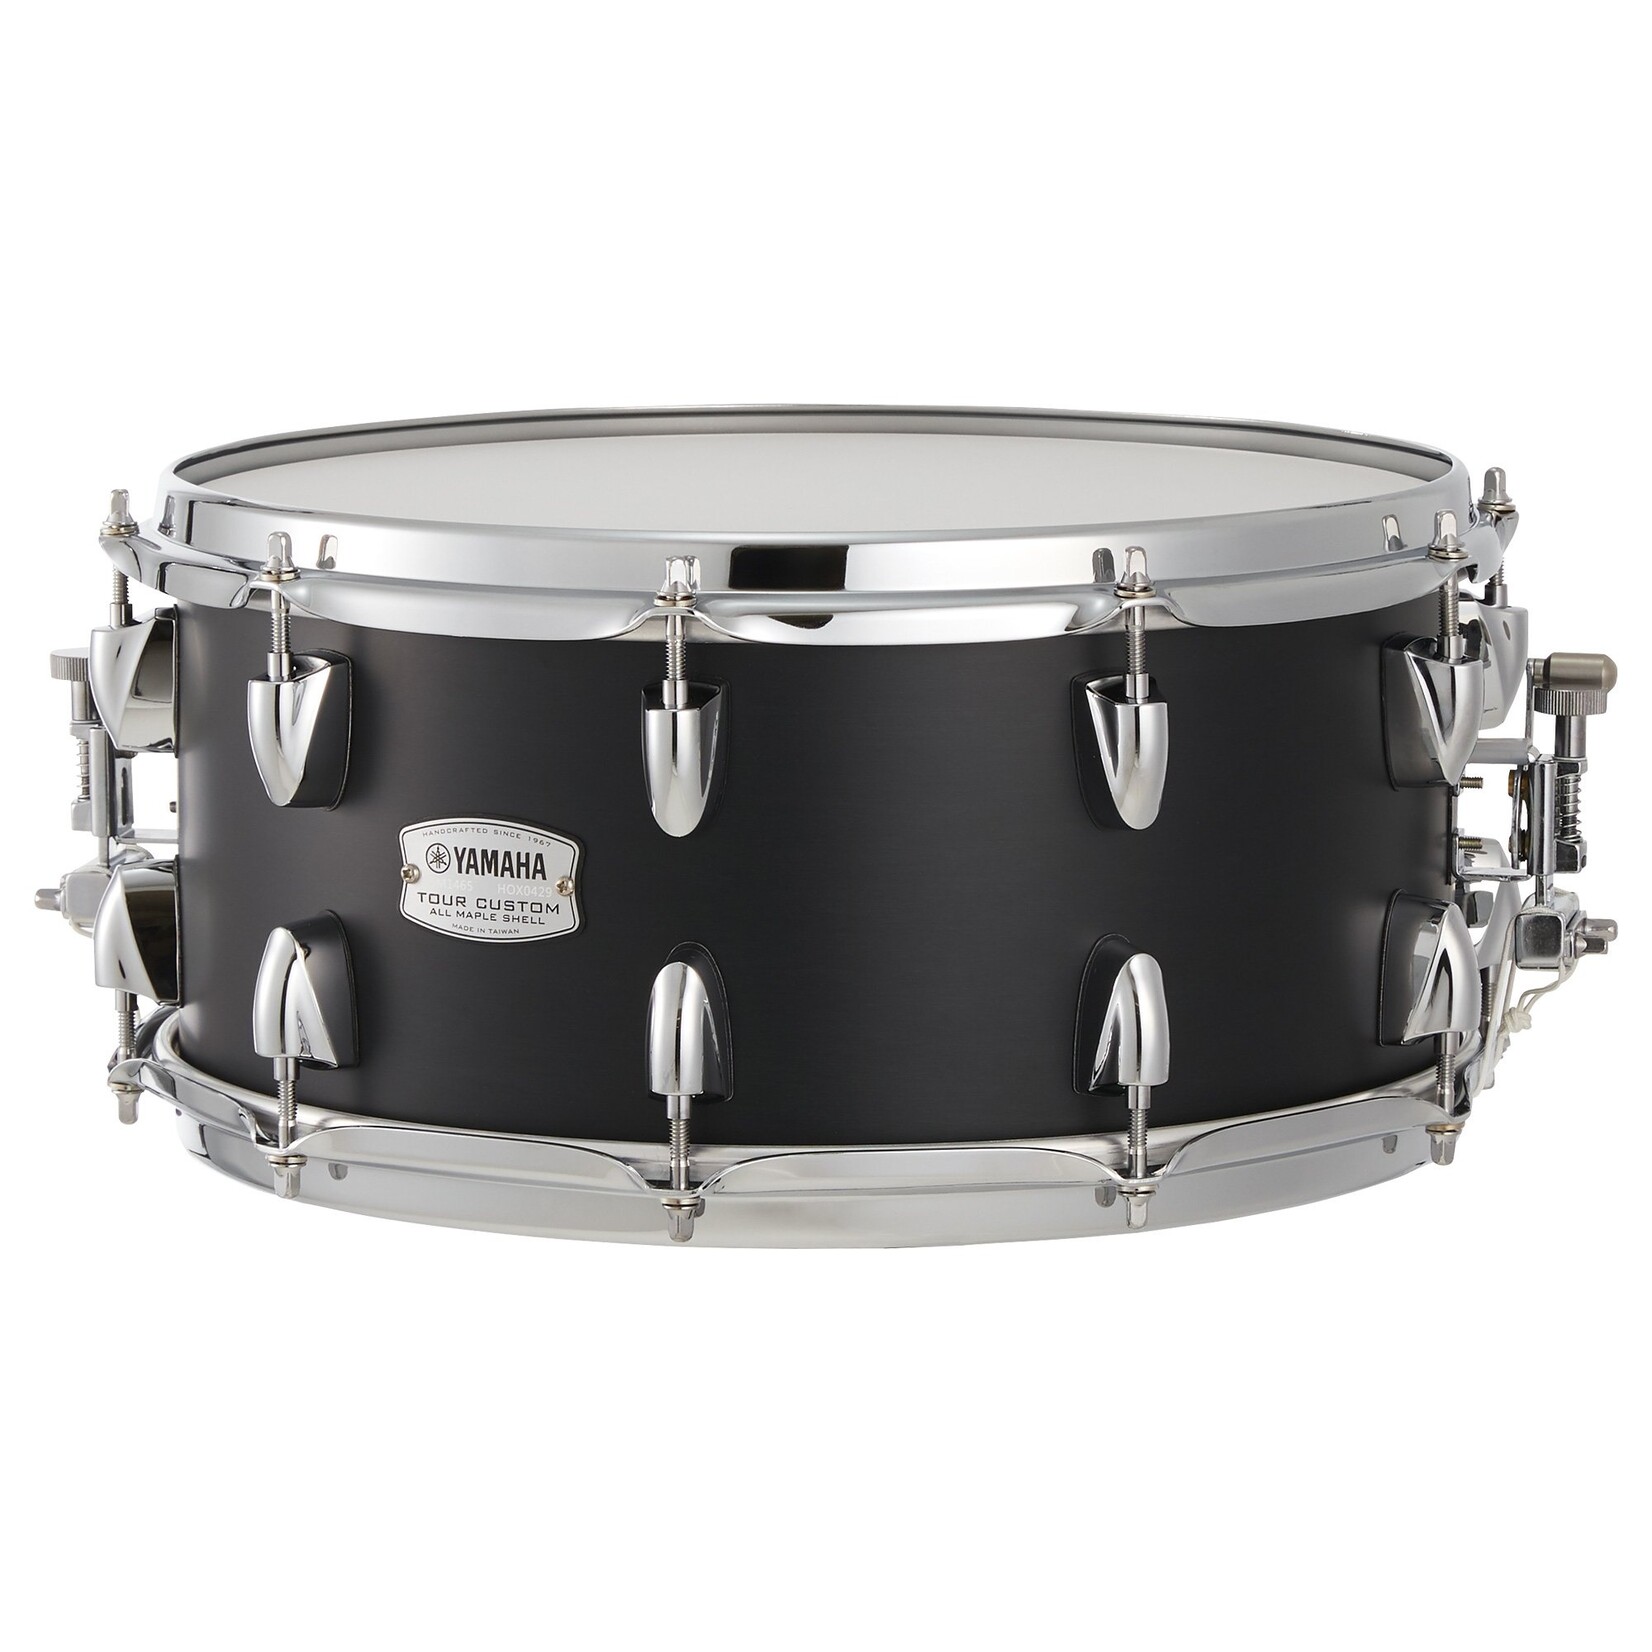 Yamaha Yamaha Tour Custom Snare Drum - 14" x 6.5" Maple - Licorice Satin